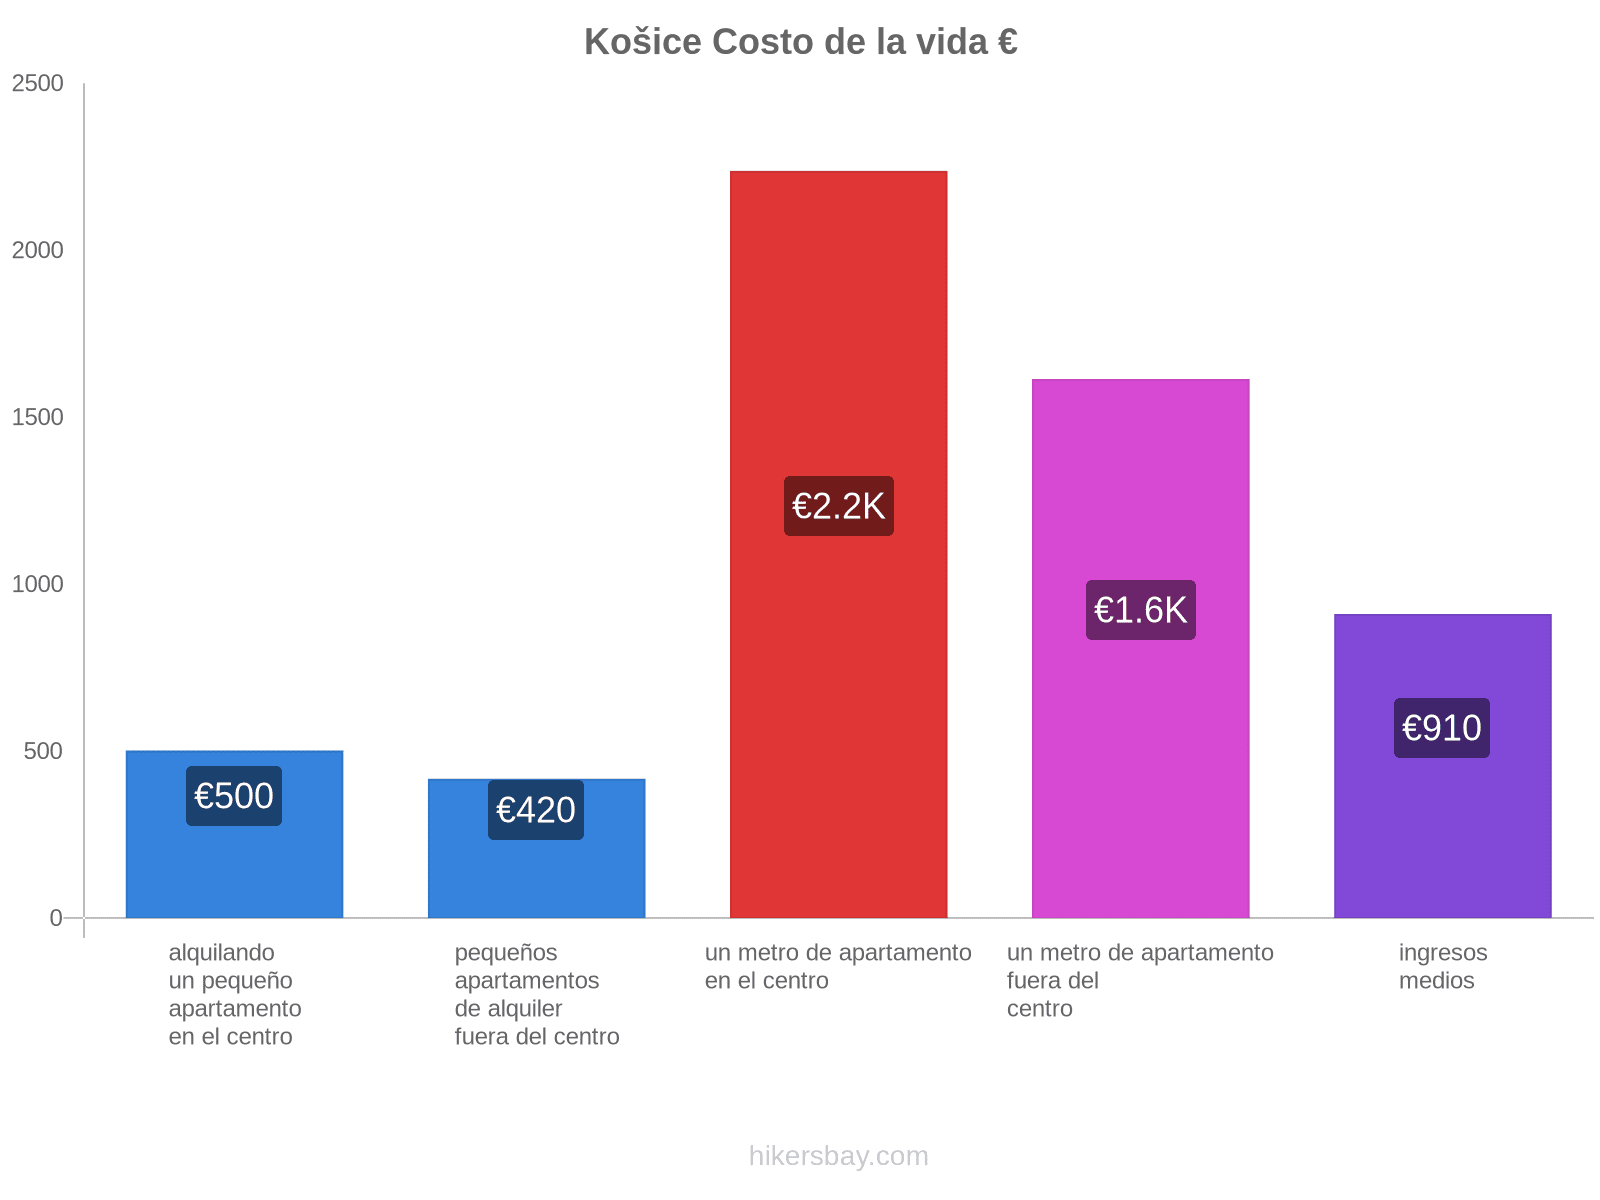 Košice costo de la vida hikersbay.com